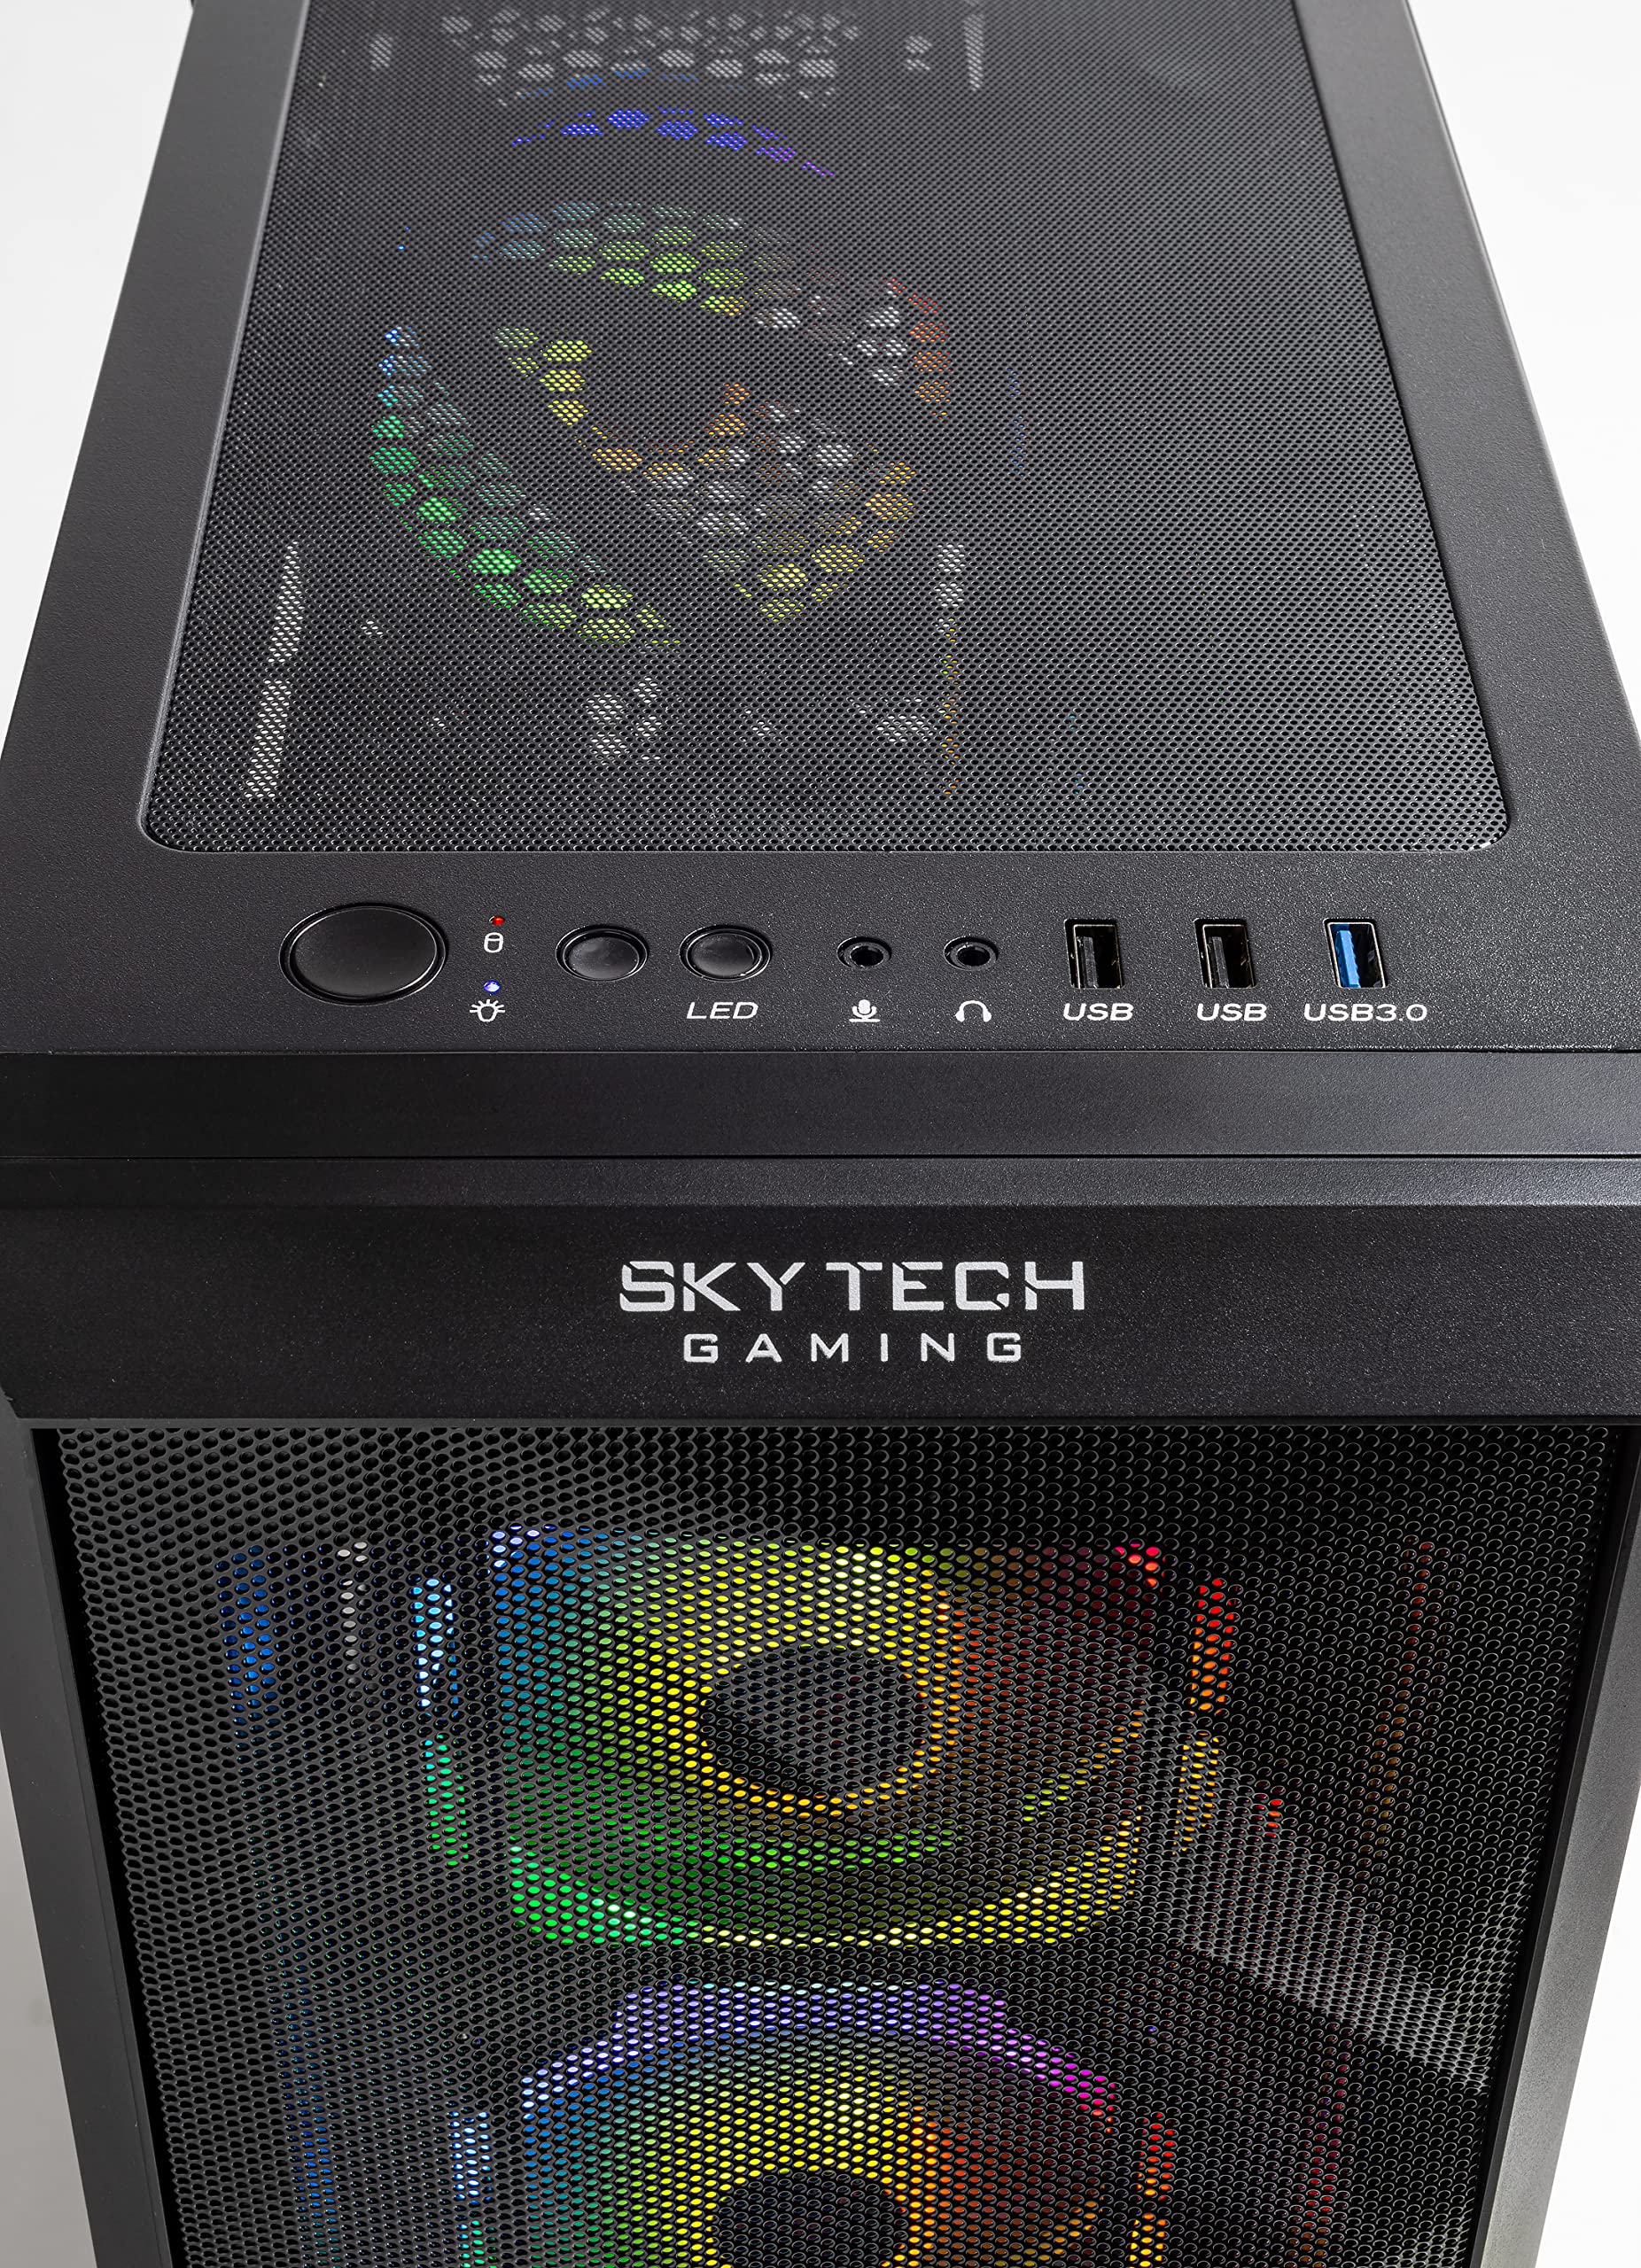 SkyTech Chronos Mini Gaming Computer PC Desktop - Intel Core-i3 10100F 3.6GHz, GTX 1650 4G, 500GB SSD, 8G 3000, RGB Fans, AC WiFi, Windows 10 Home 64-bit,Black